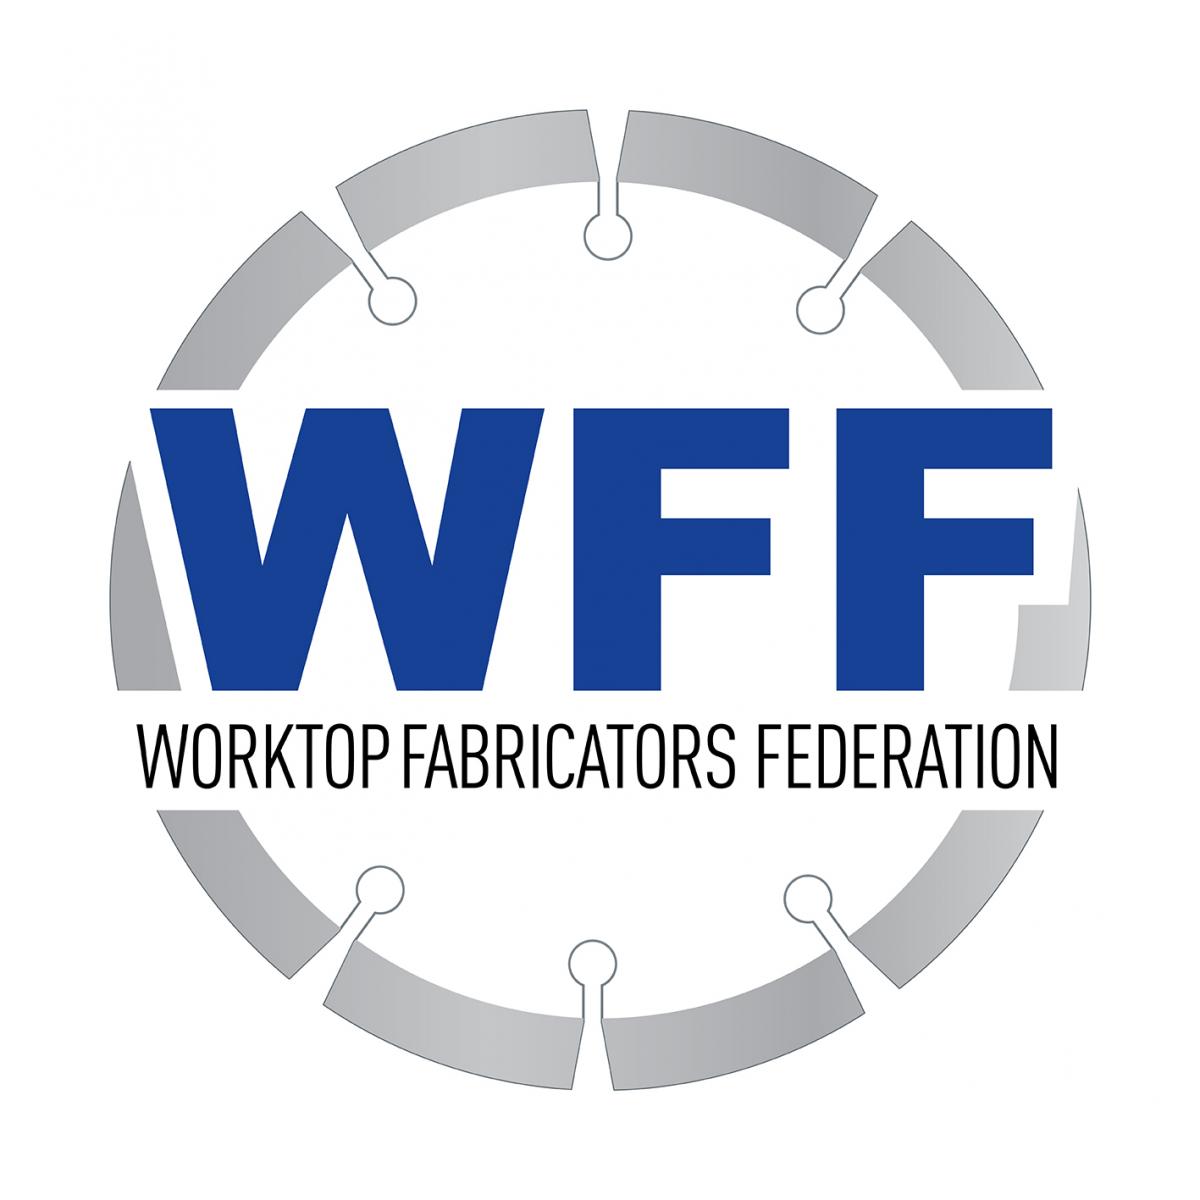 Worktop Fabricators Federation logo